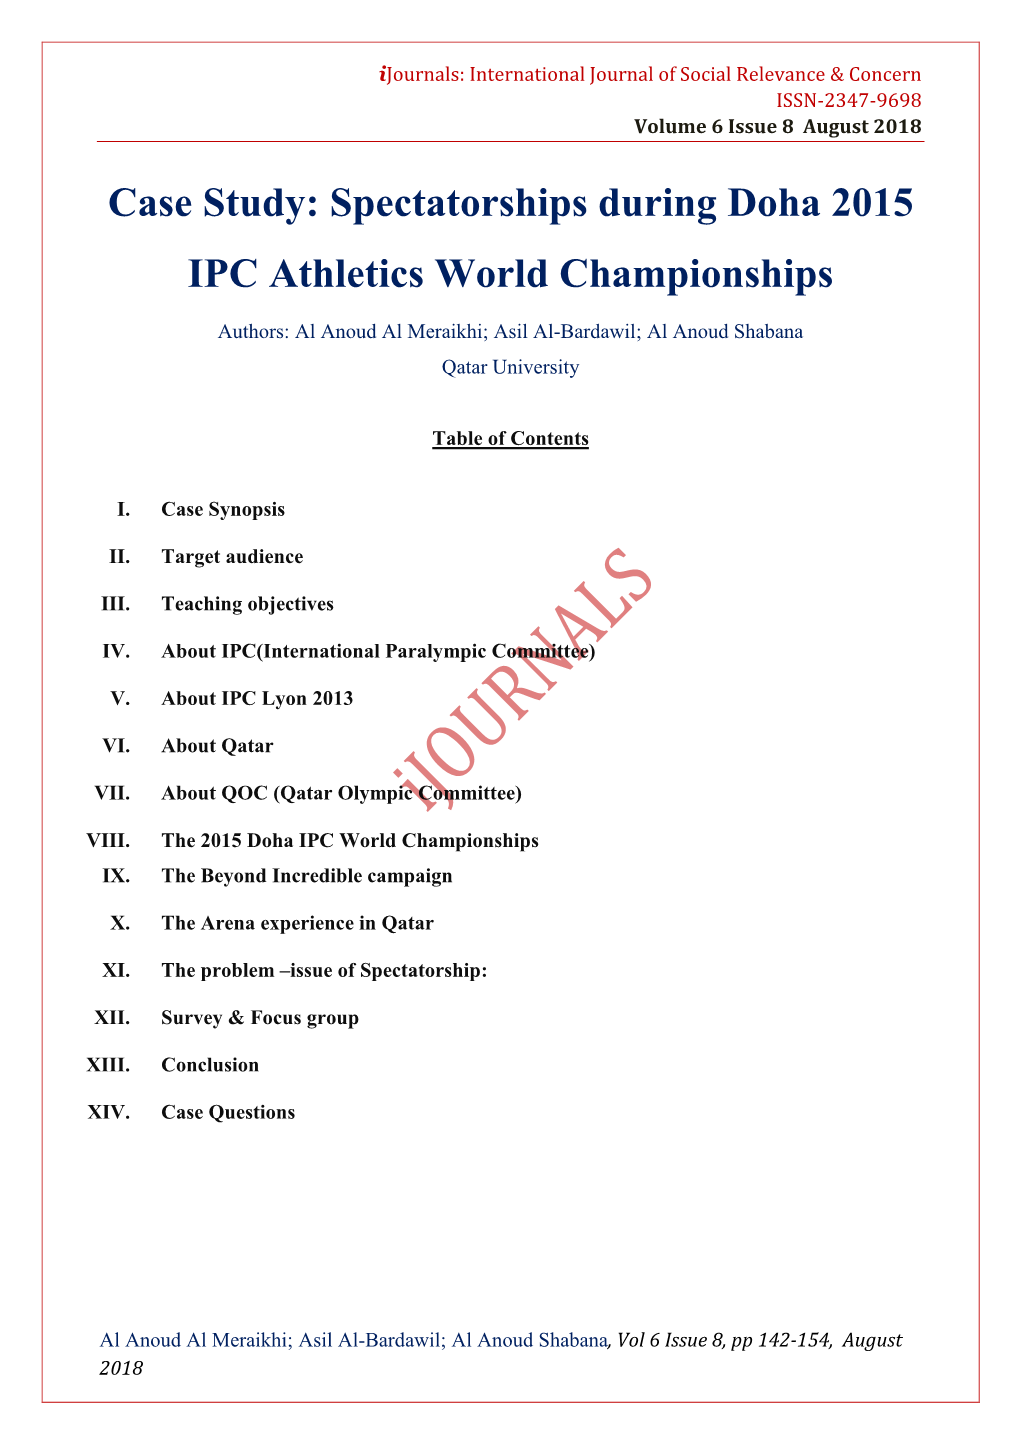 Spectatorships During Doha 2015 IPC Athletics World Championships